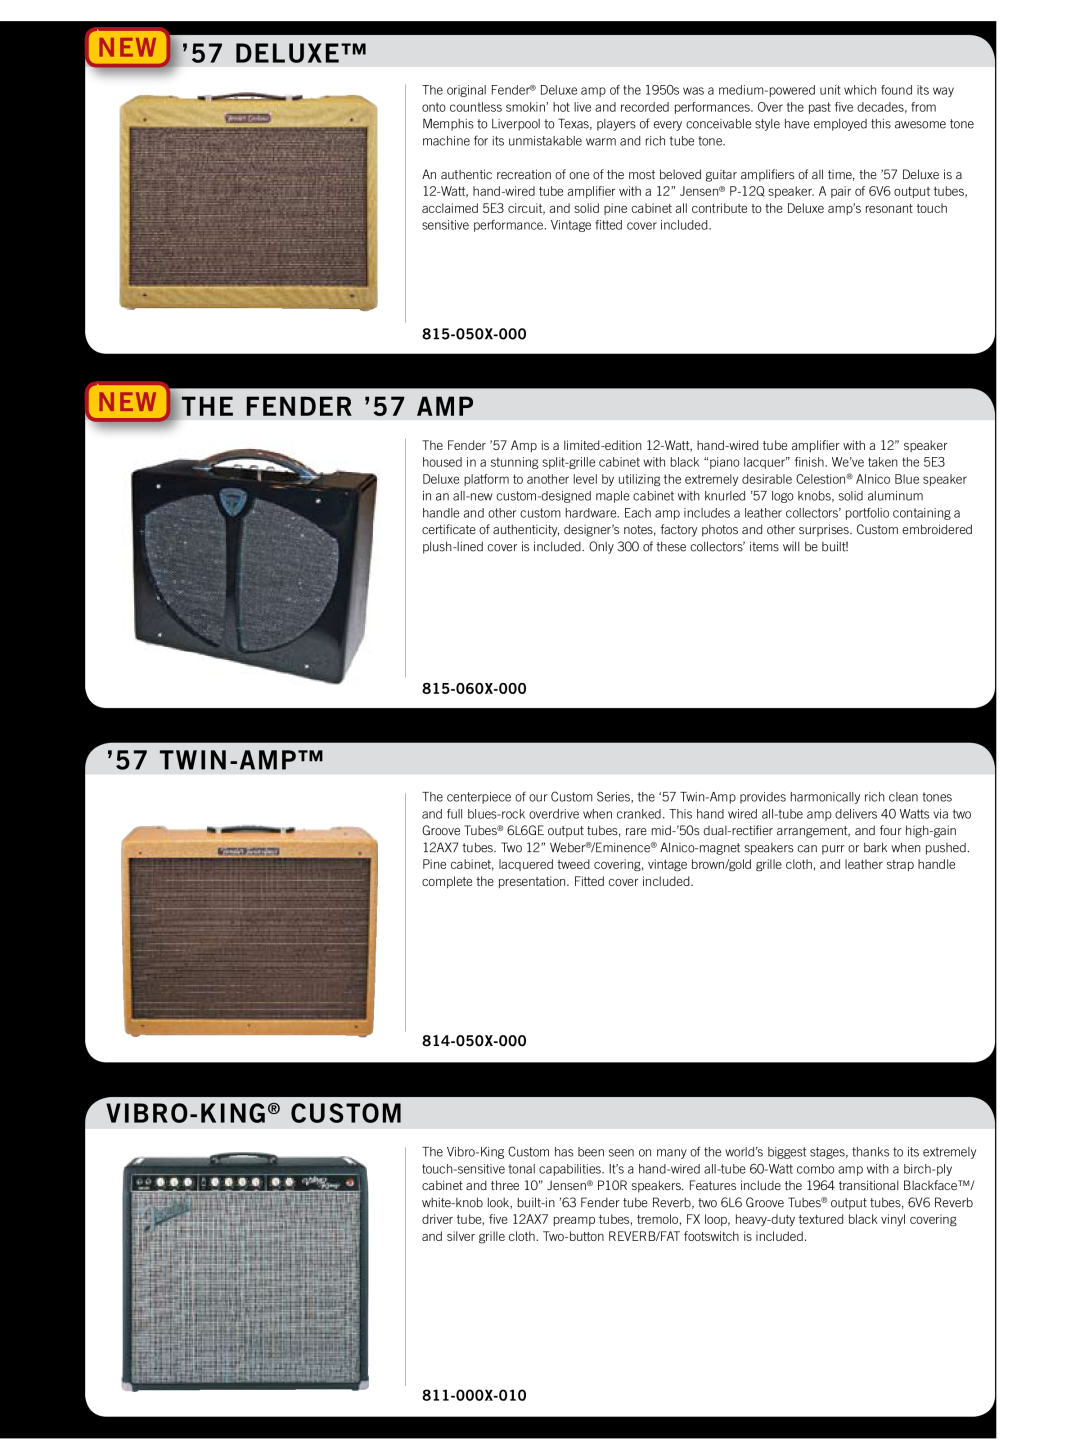 Fender 811-000X-010 manual NEW ’57 DELUXE, NEW THE FENDER ’57 AMP, ’57 TWIN-AMP, Vibro-King Custom, 815-050X-000 